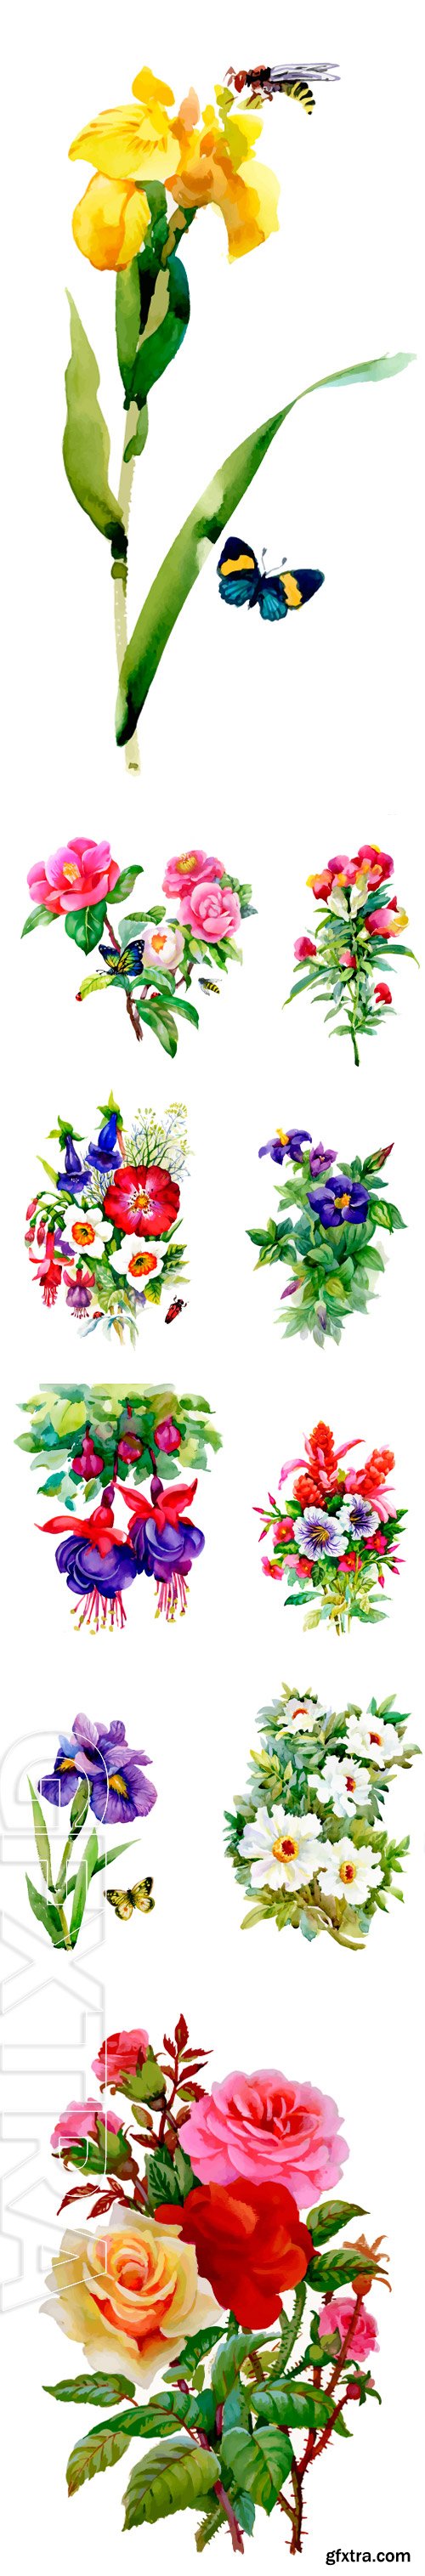 Stock Vectors - Watercolor garden Iris flowers isolated on white background vector illustration